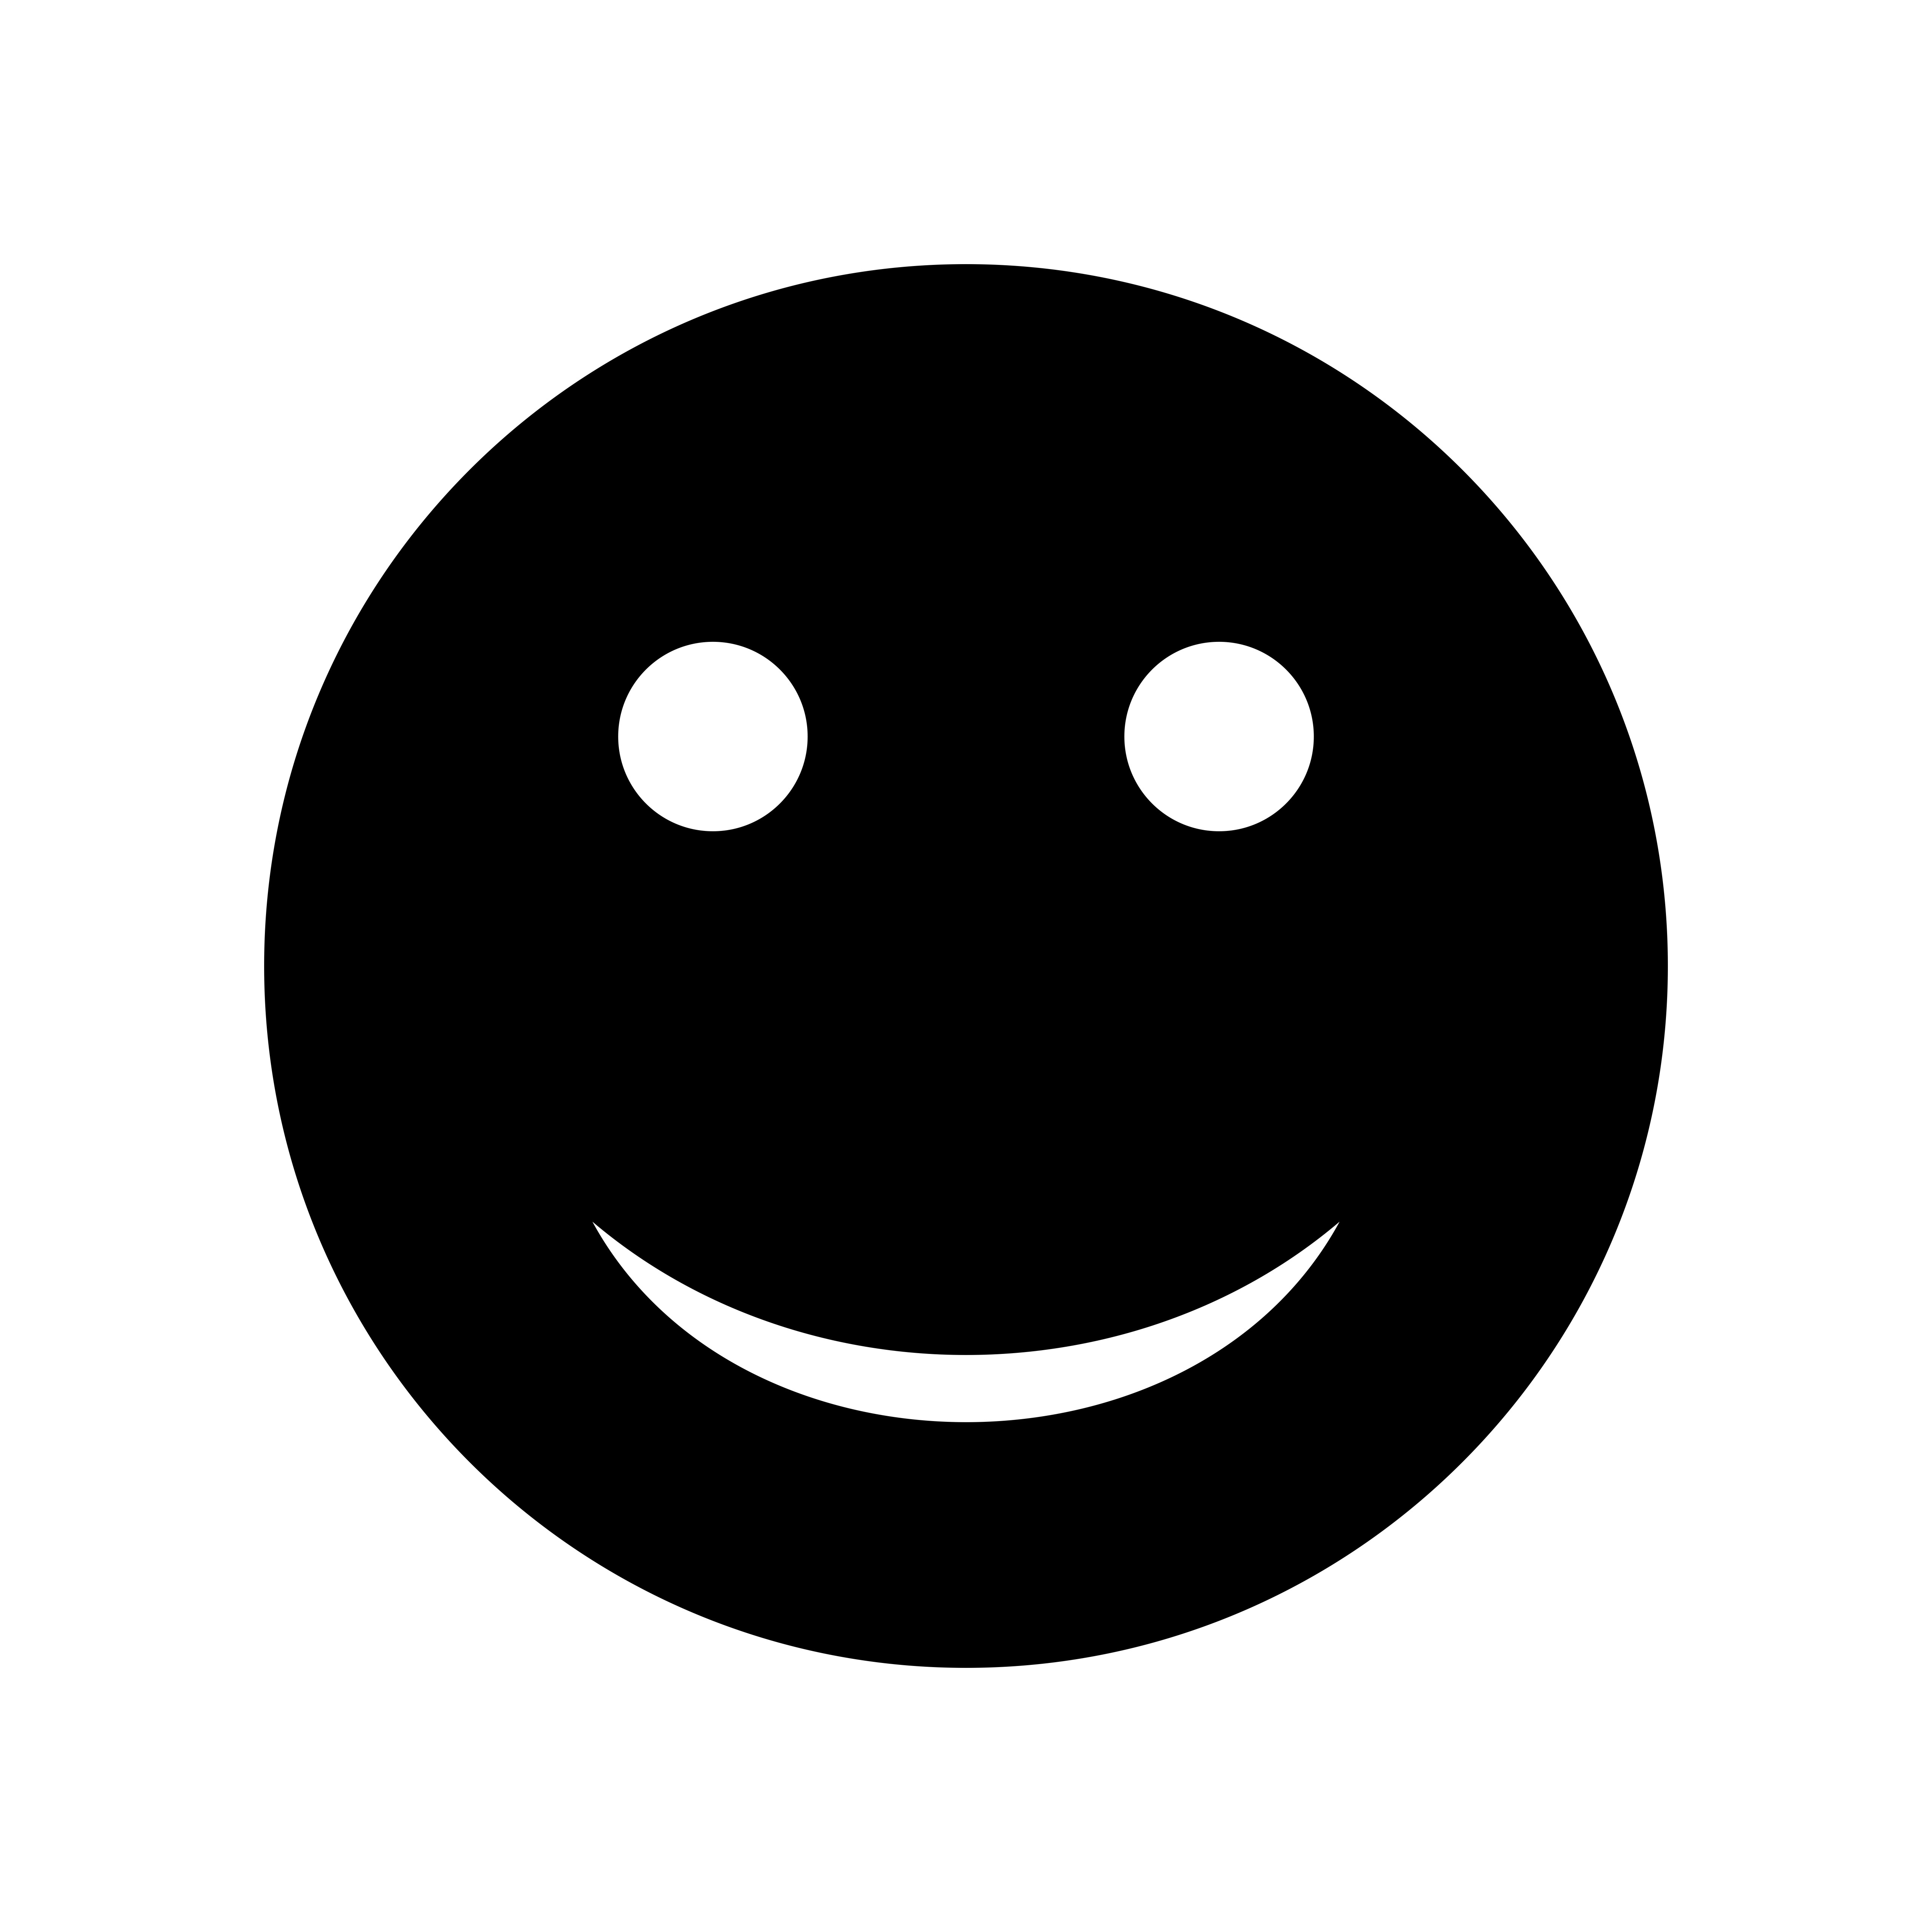 Happy Emoji Vector Icon - Download Free Vectors, Clipart Graphics & Vector Art5120 x 5120